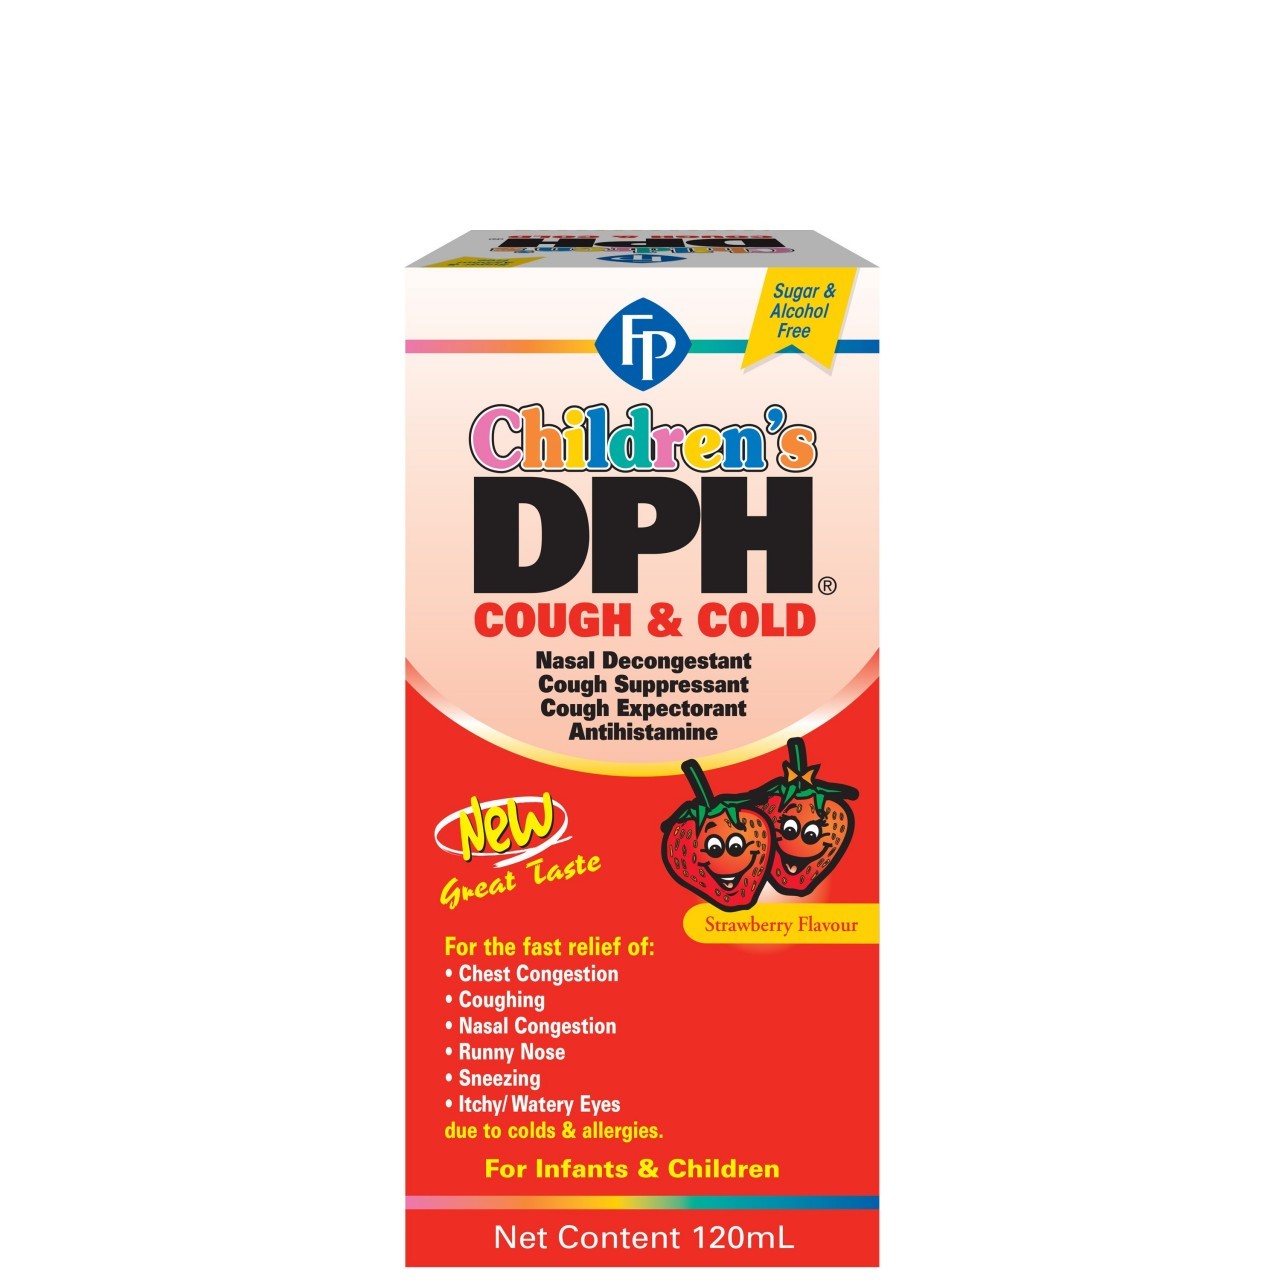 Children's DPH Cough & Cold